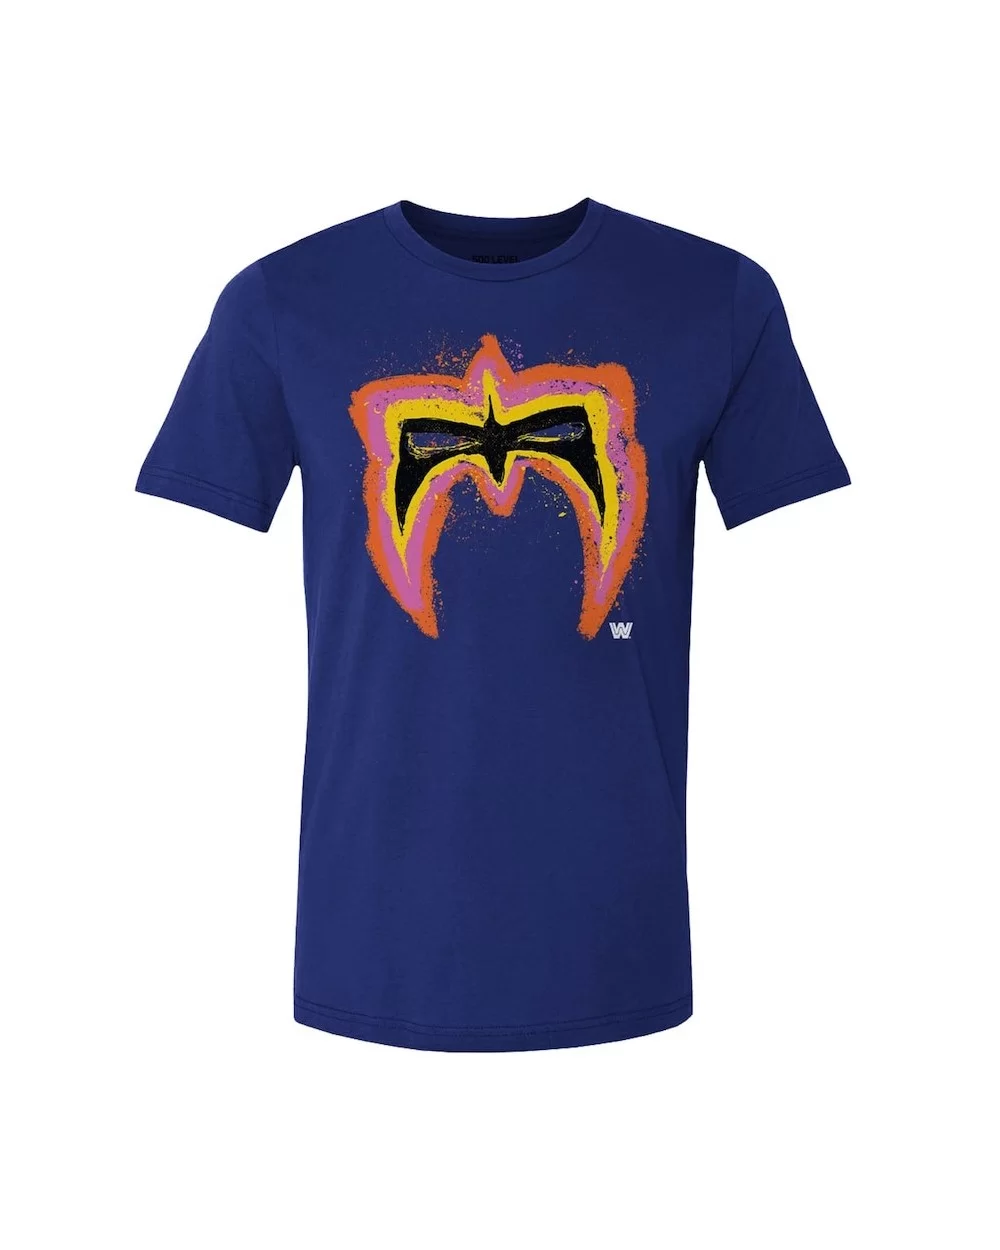 Men's Blue The Ultimate Warrior Face Paint T-Shirt $12.00 T-Shirts